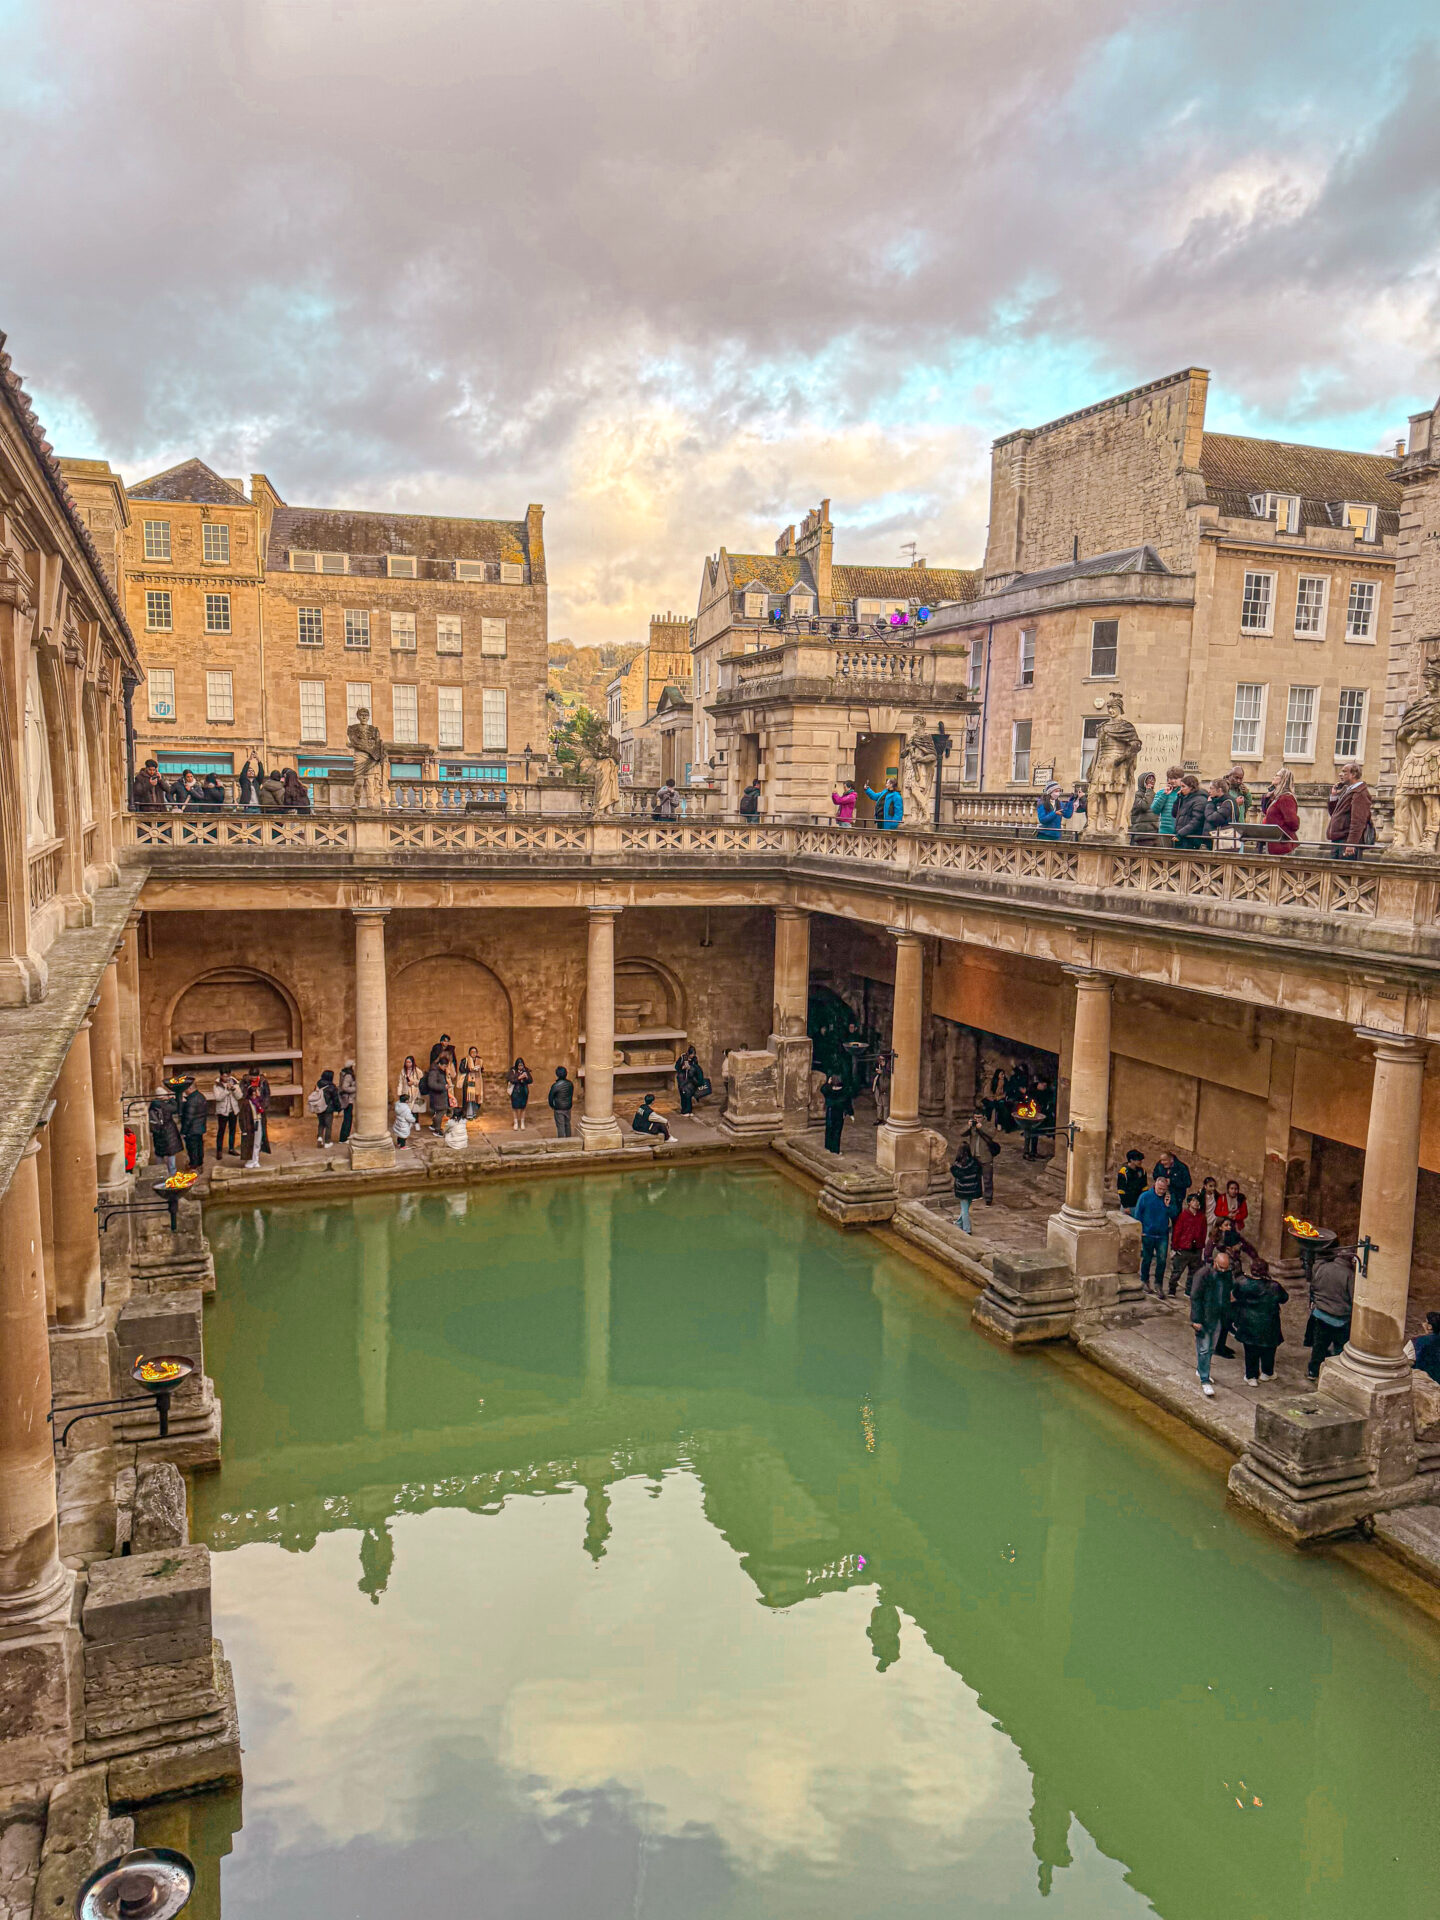 The roman baths